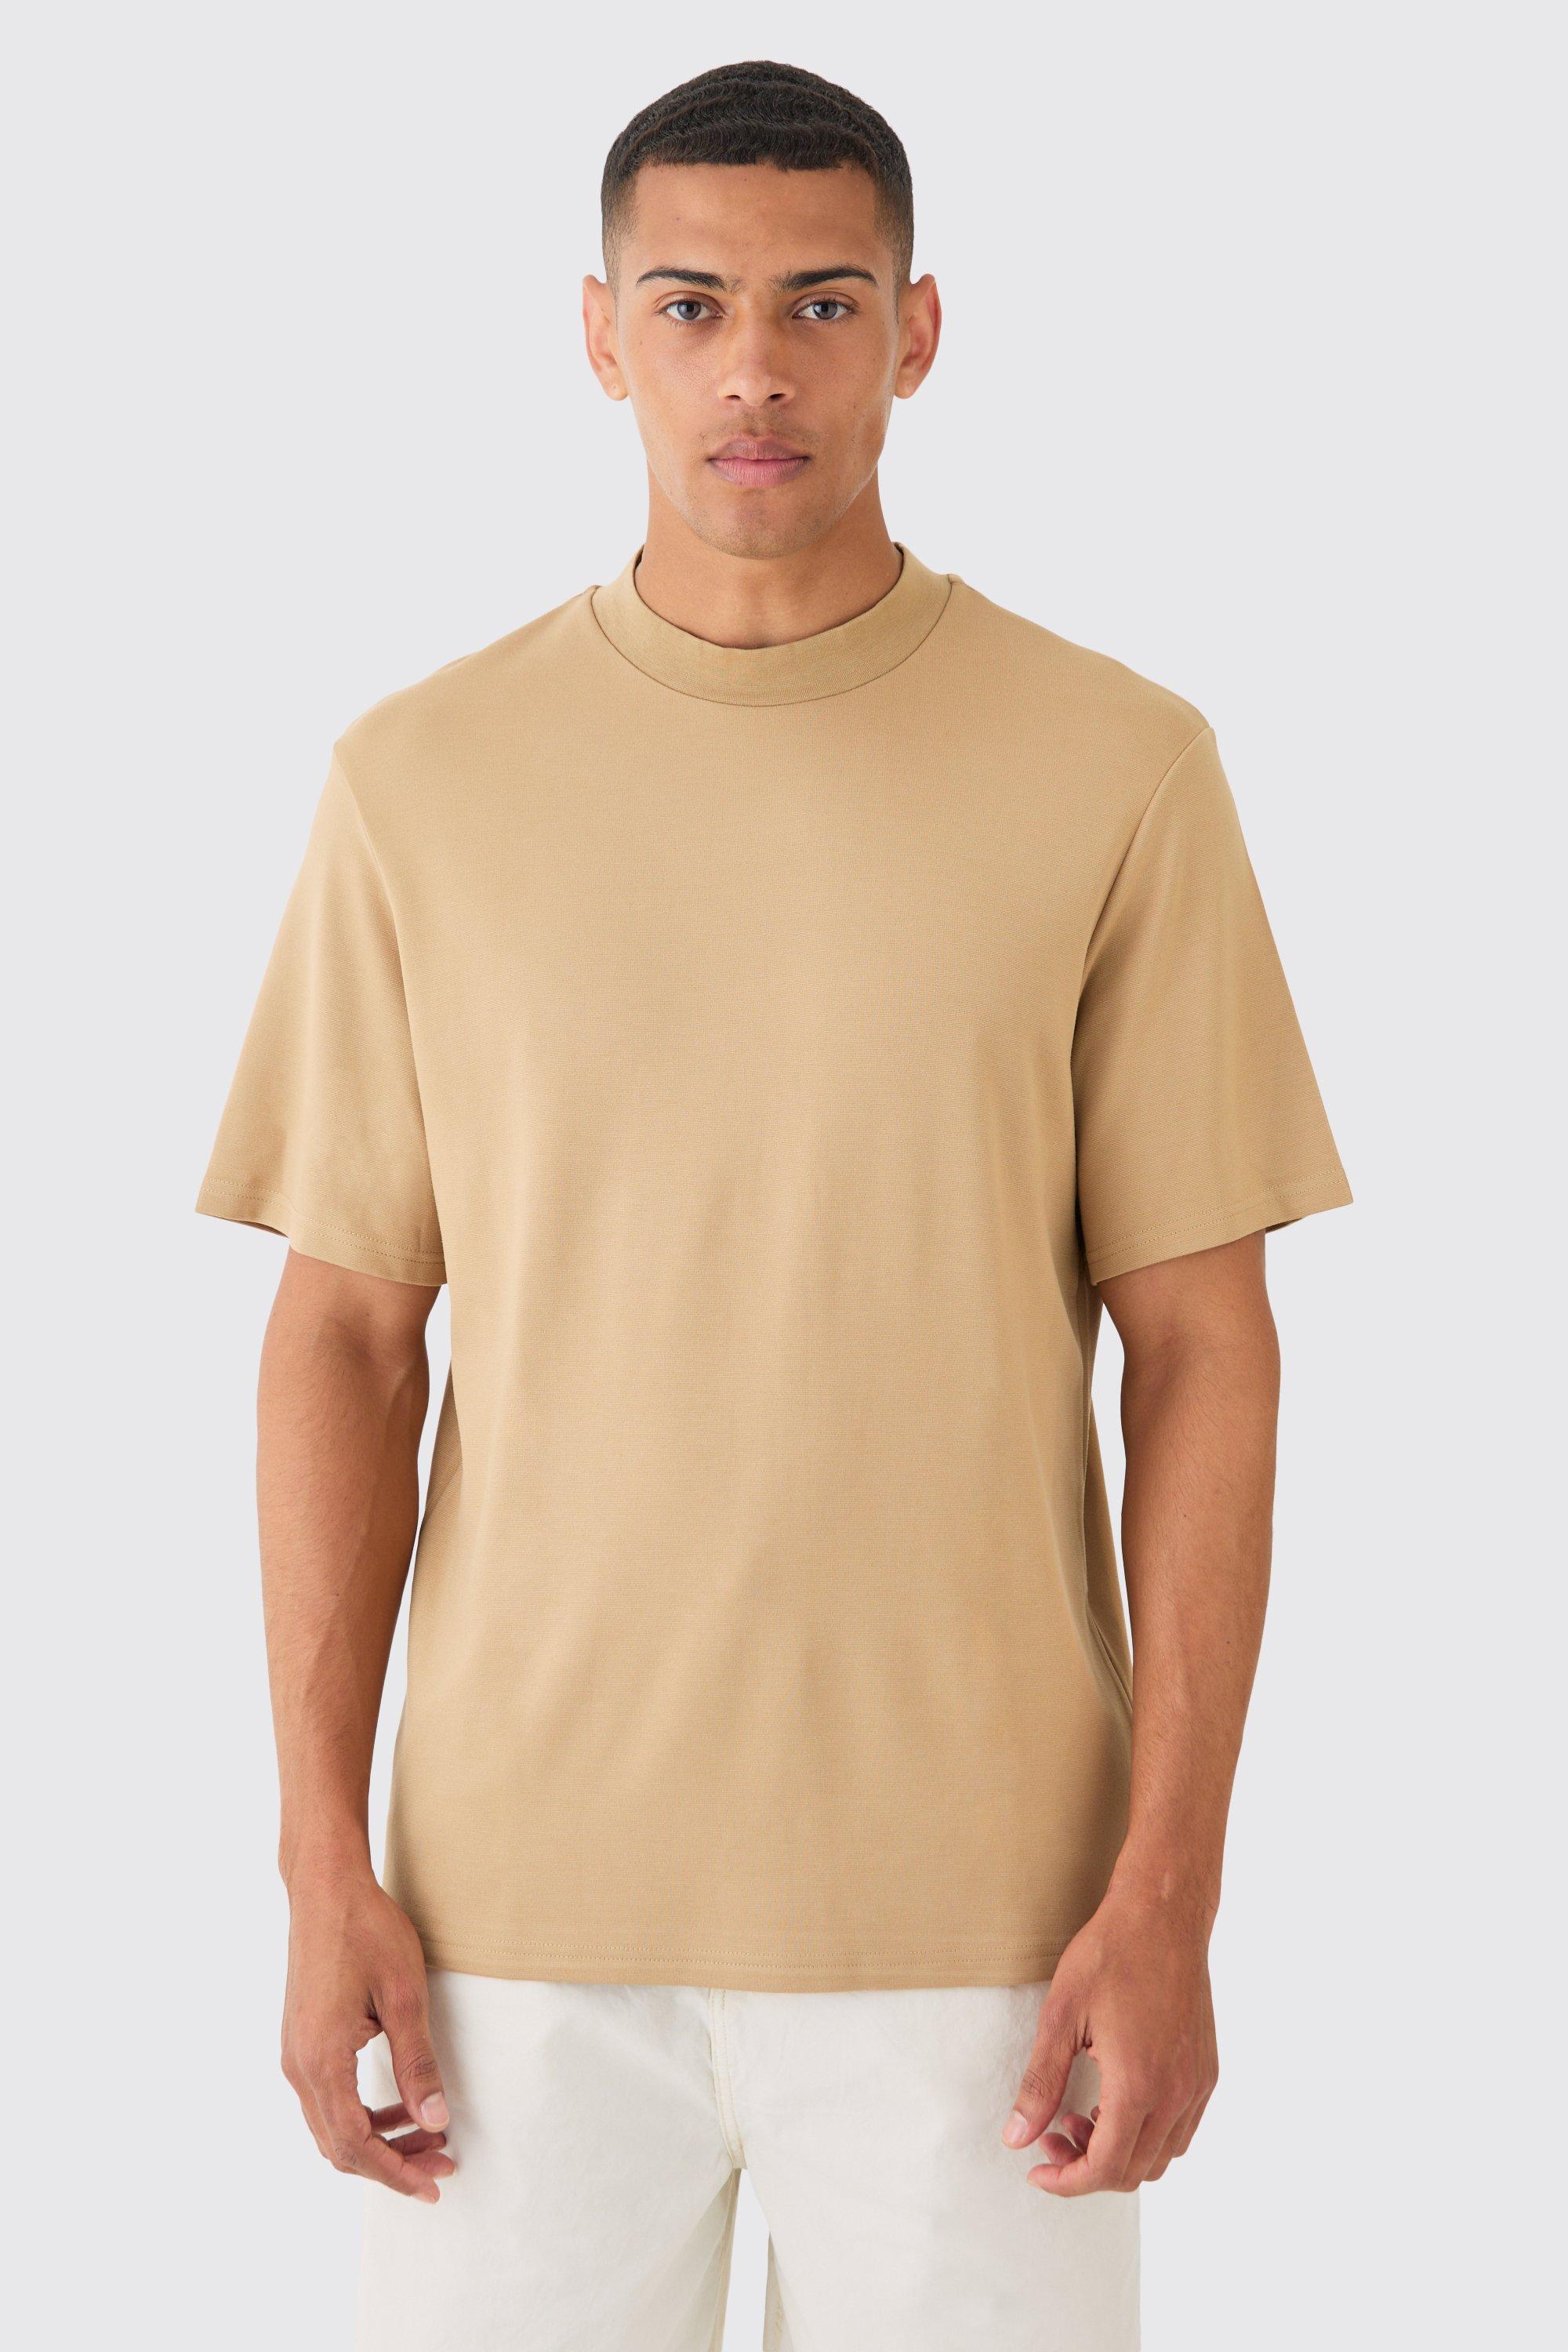 Image of Extended Neck Core Super Heavy Premium T-shirt, Beige